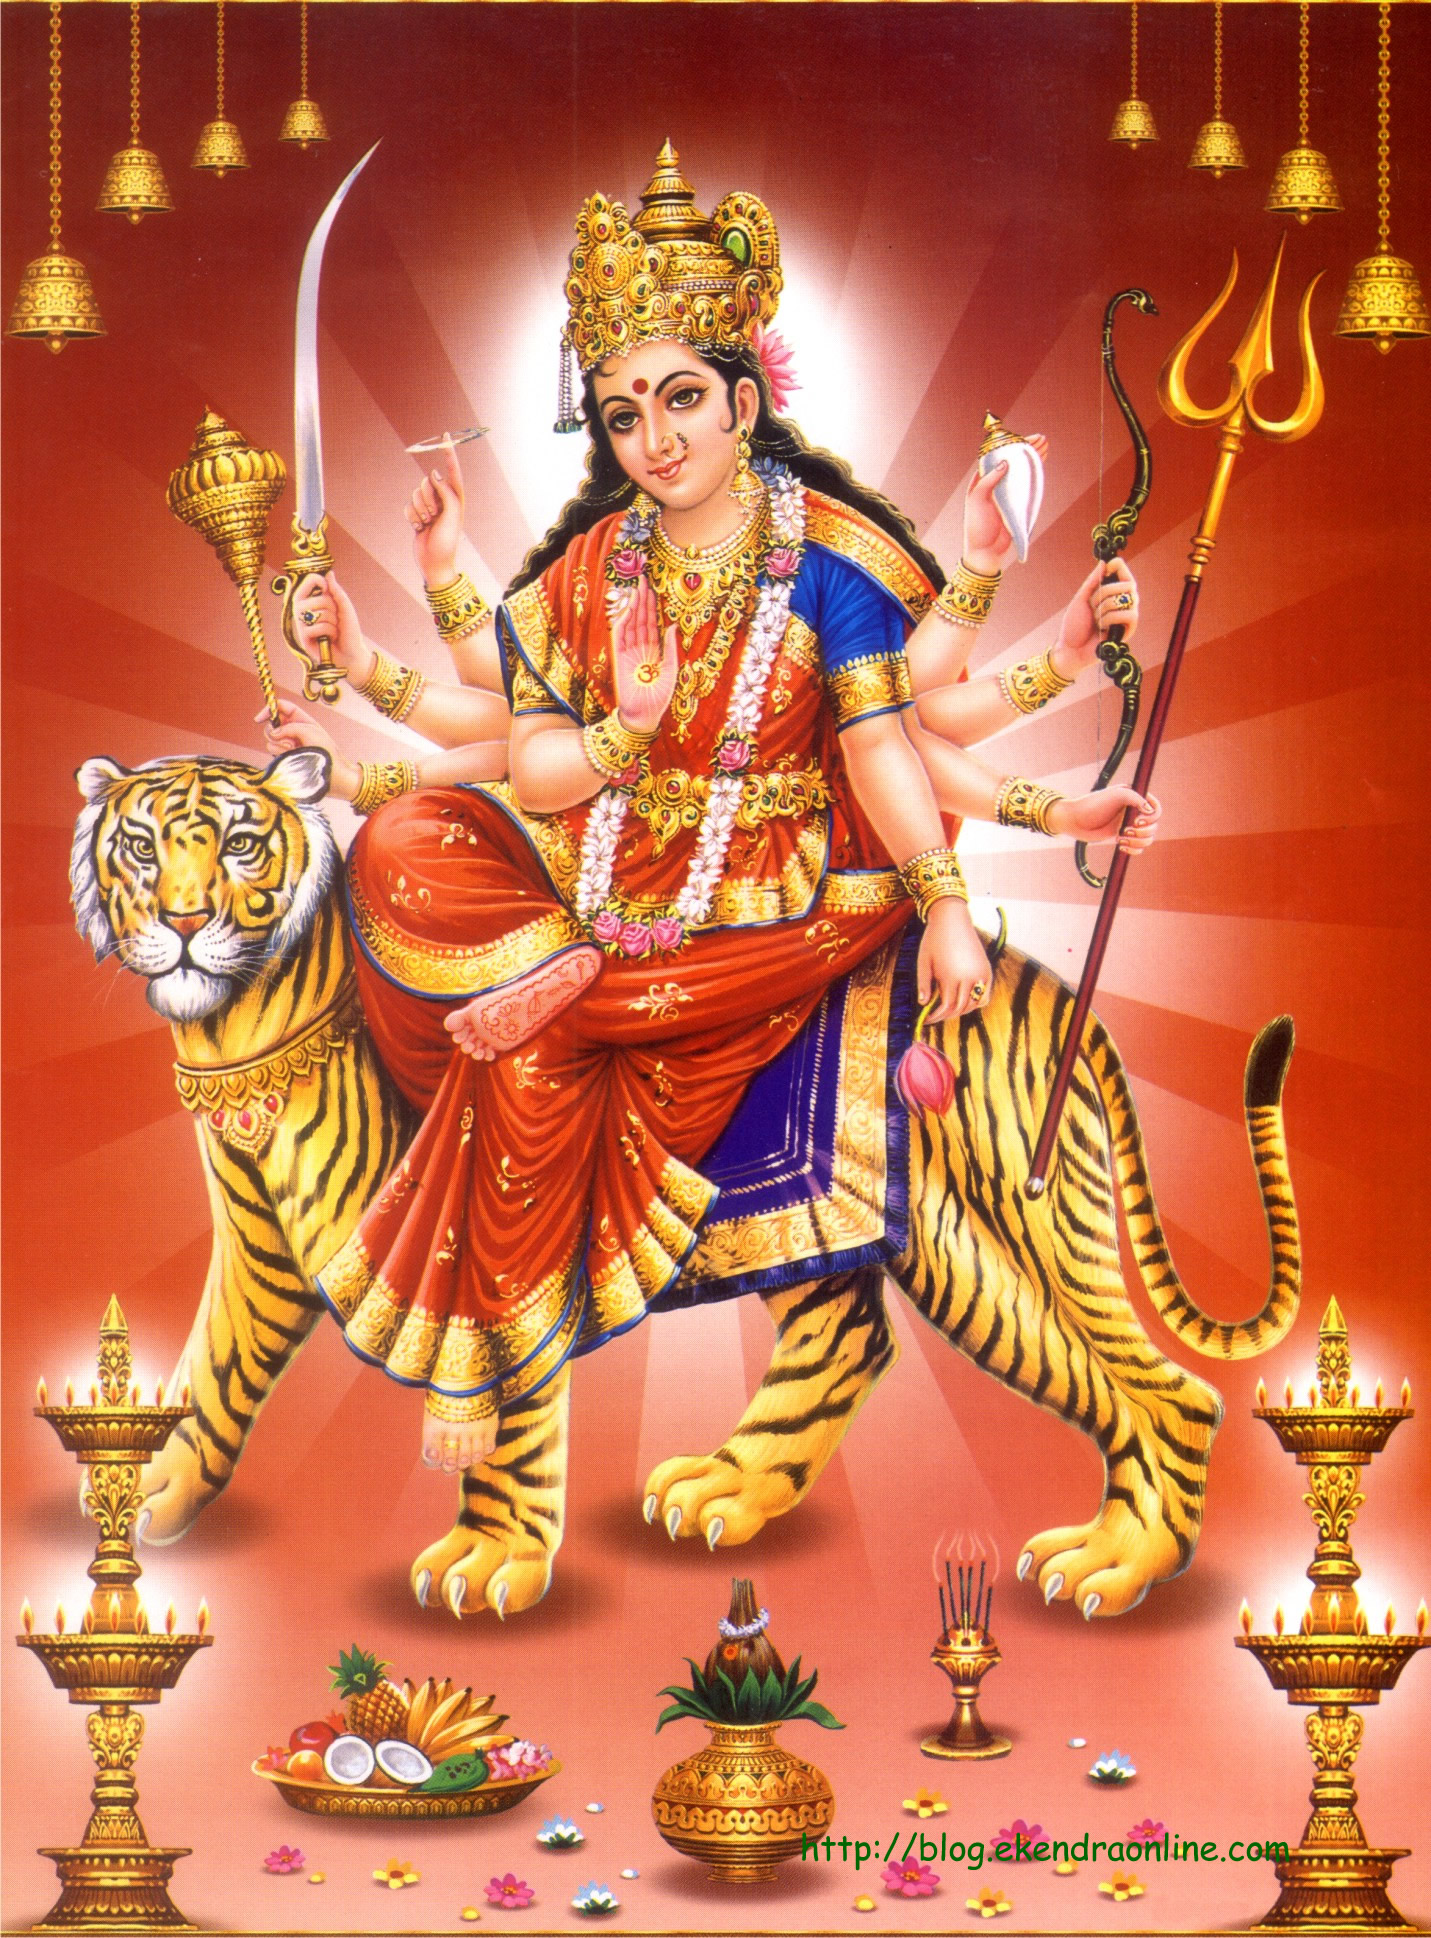 Praying Durga mata on Dashain/ Nava ratri